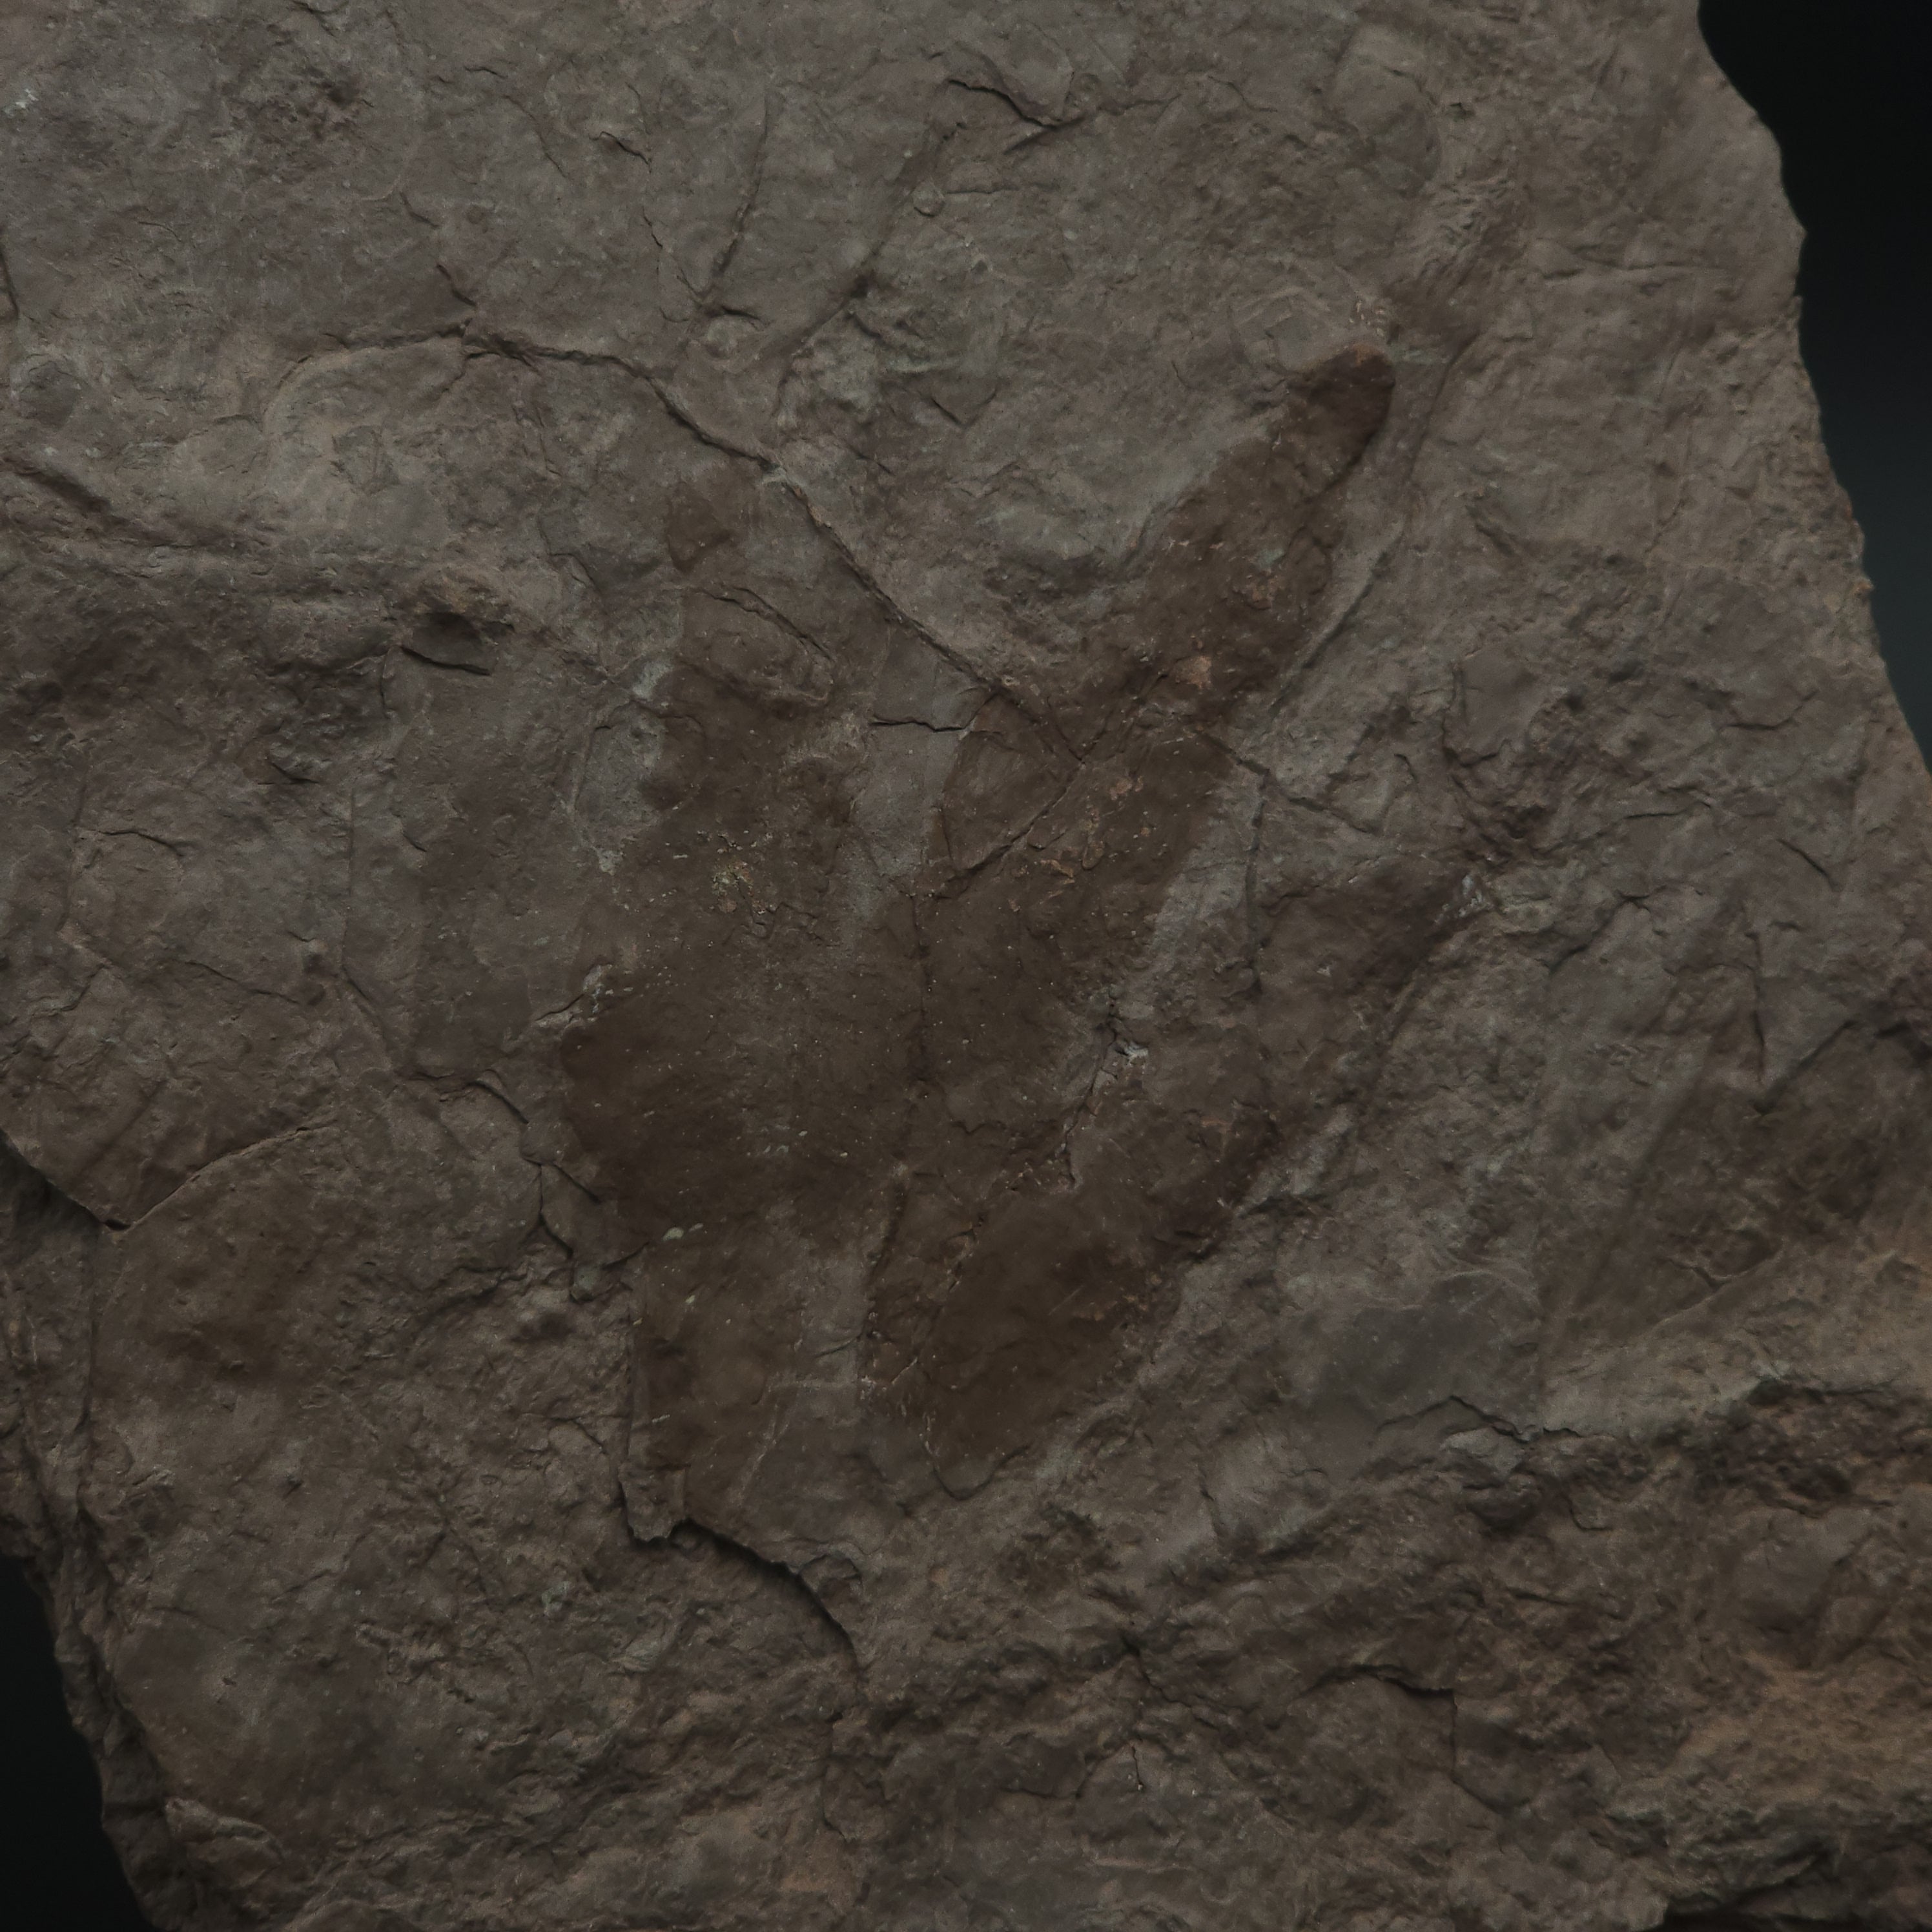 Dinosaur Fossil Footprint - Grallator | Portland Formation, Massachusetts